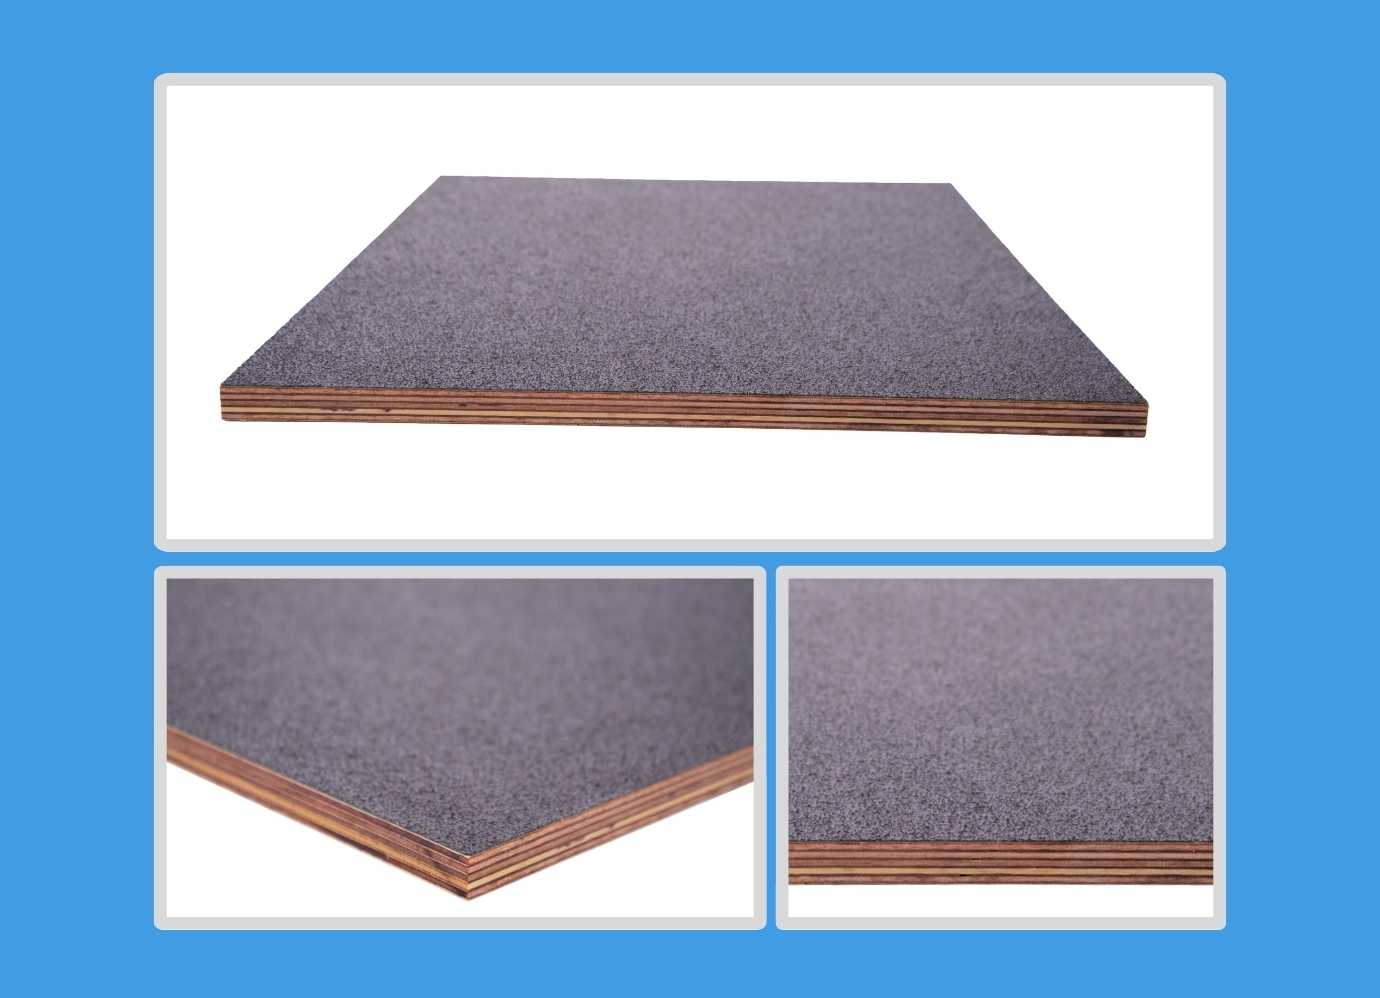 GRIP non-slip material / anti-slip material Lap Board - Black, 11